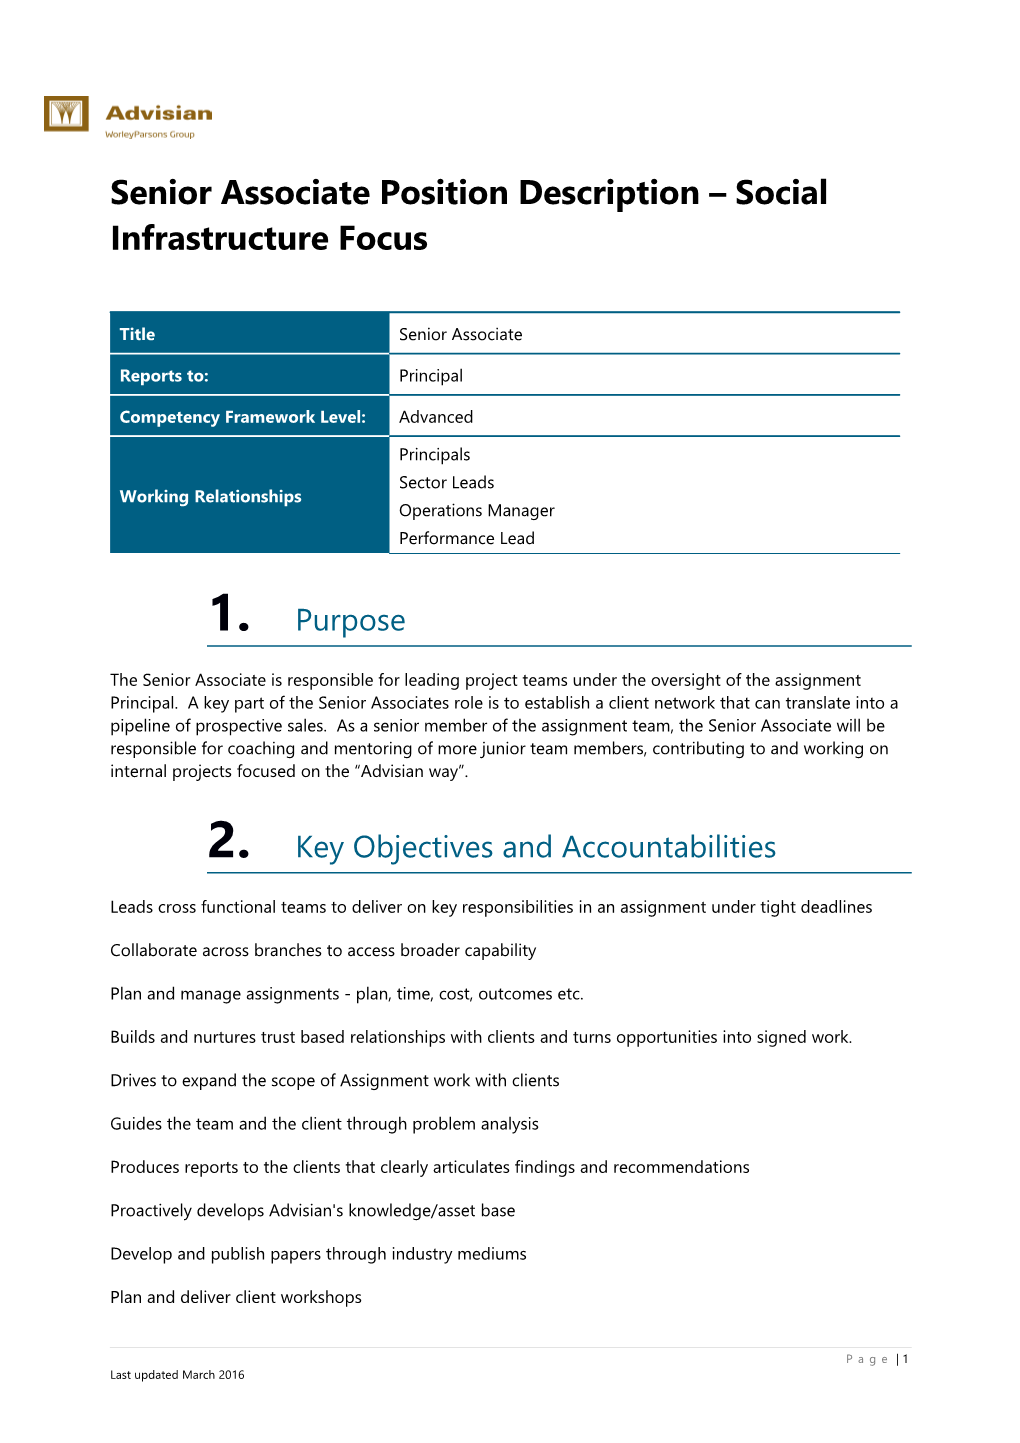 Senior Associate Position Description Social Infrastructure Focus